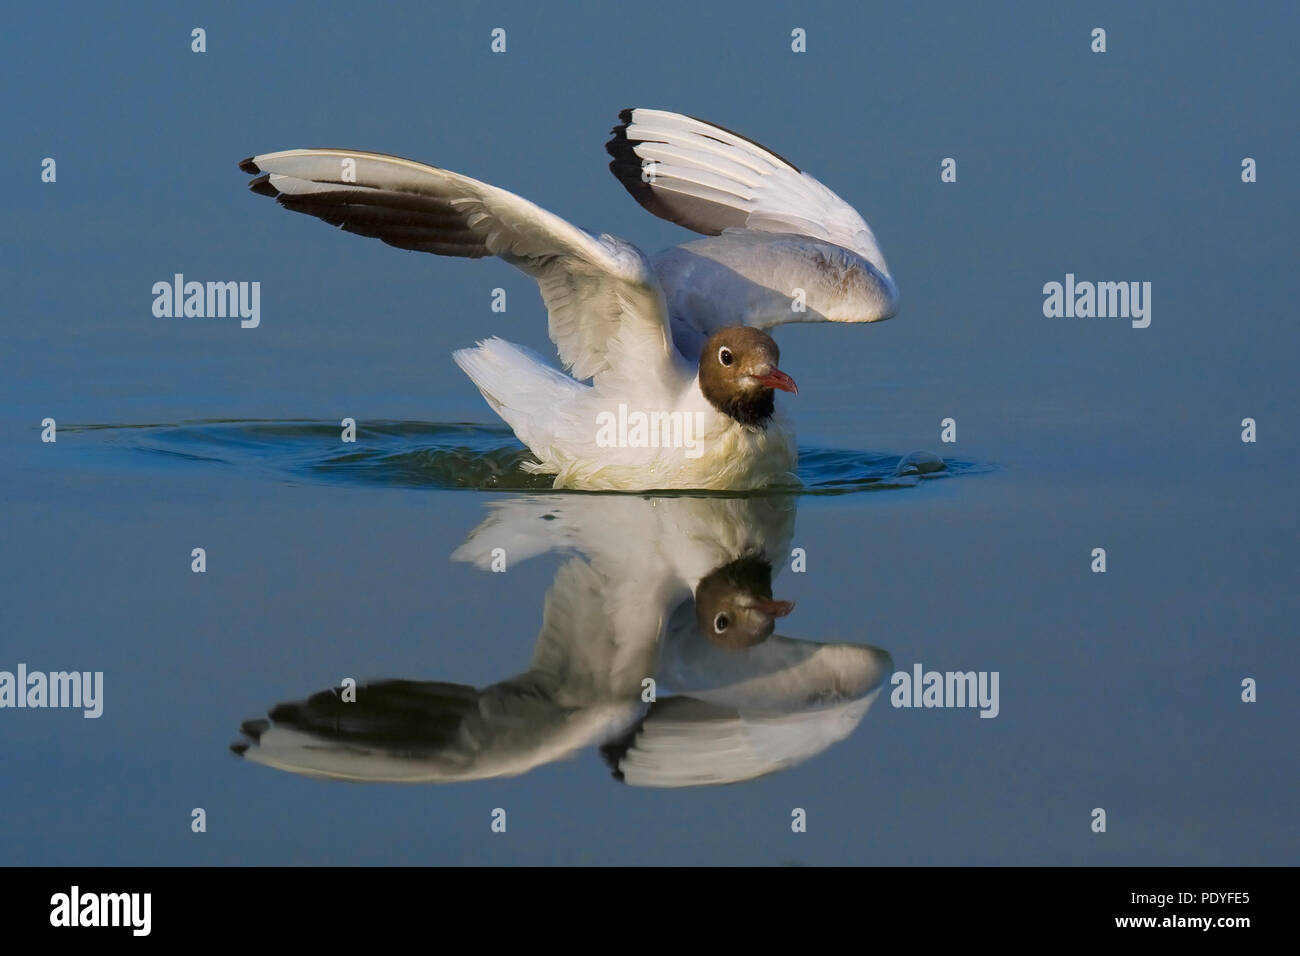 Common Black-headed Gull with wings raised and reflection in water; Chroicocephalus ridibundus; Kokmeeuw zwemmend met opgeheven vleugels en weerspiegeling in het water. Stock Photo